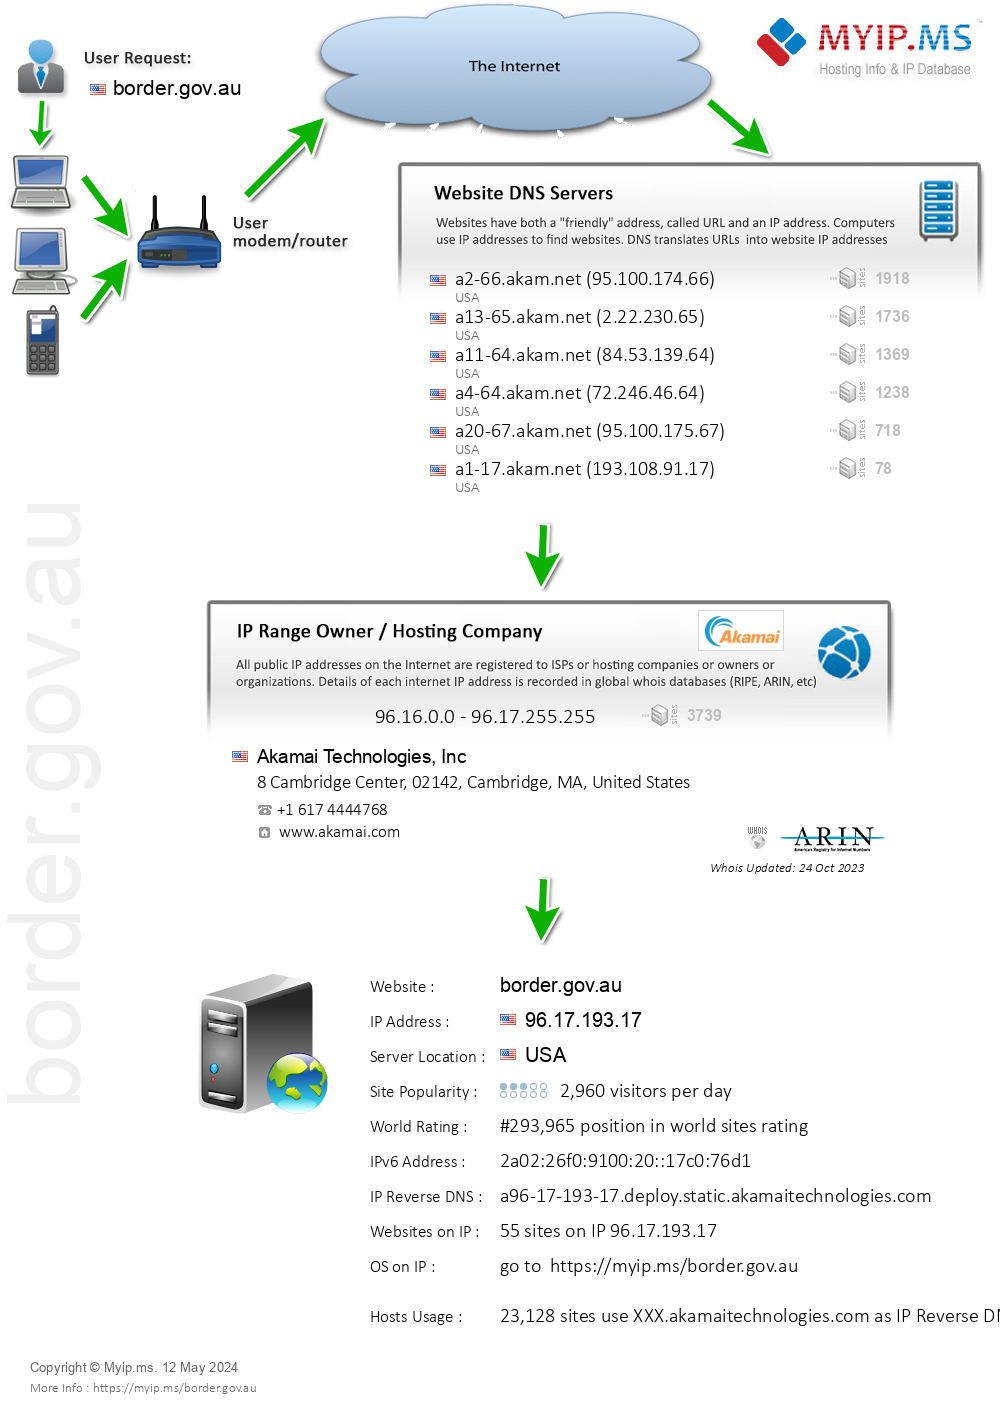 Border.gov.au - Website Hosting Visual IP Diagram